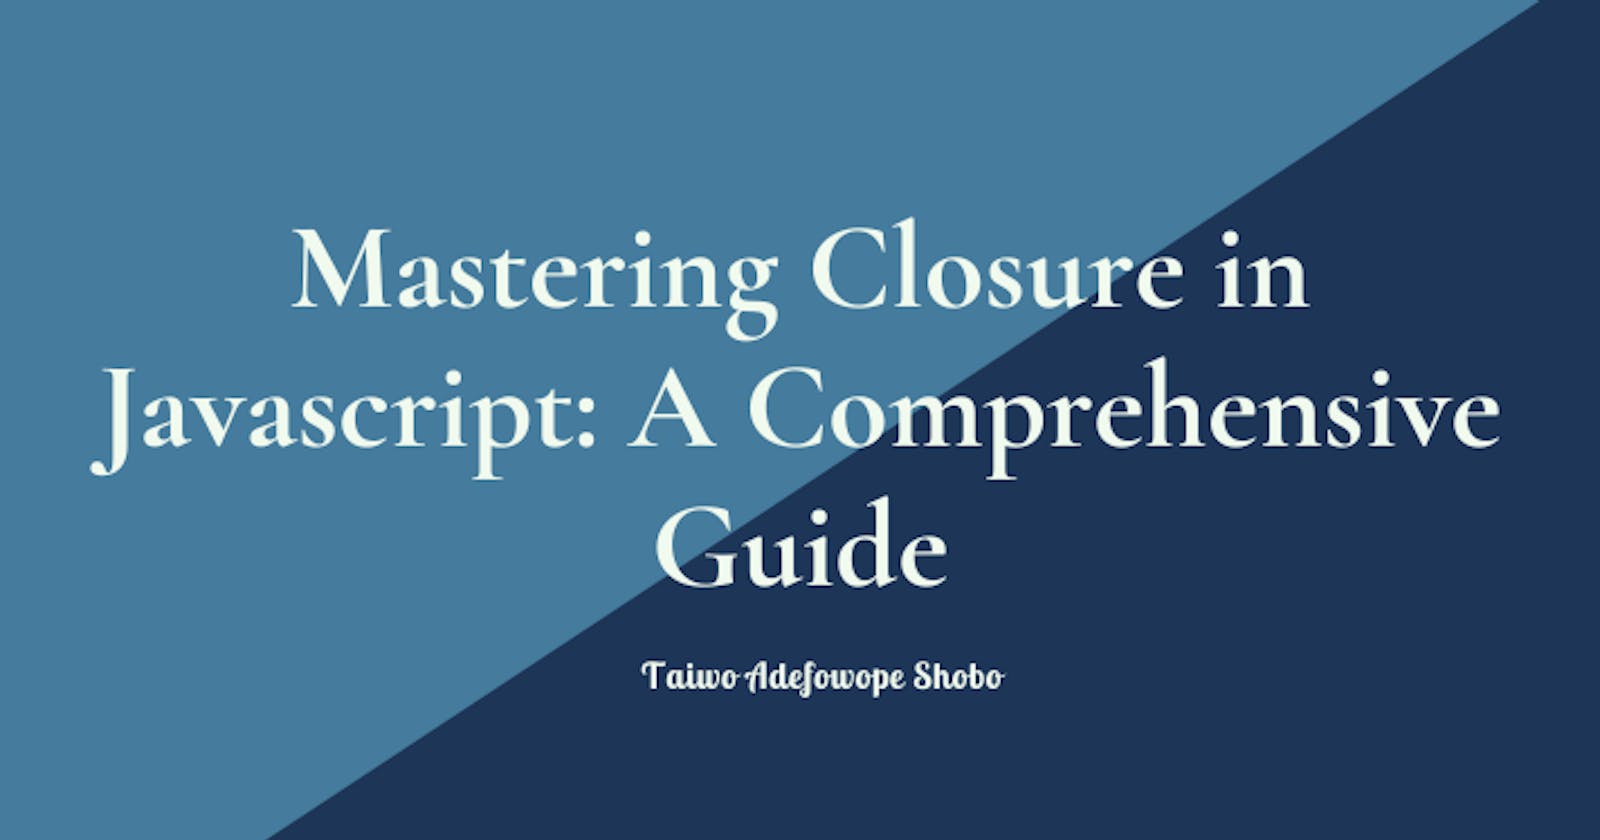 Mastering Closure in Javascript: A Comprehensive Guide